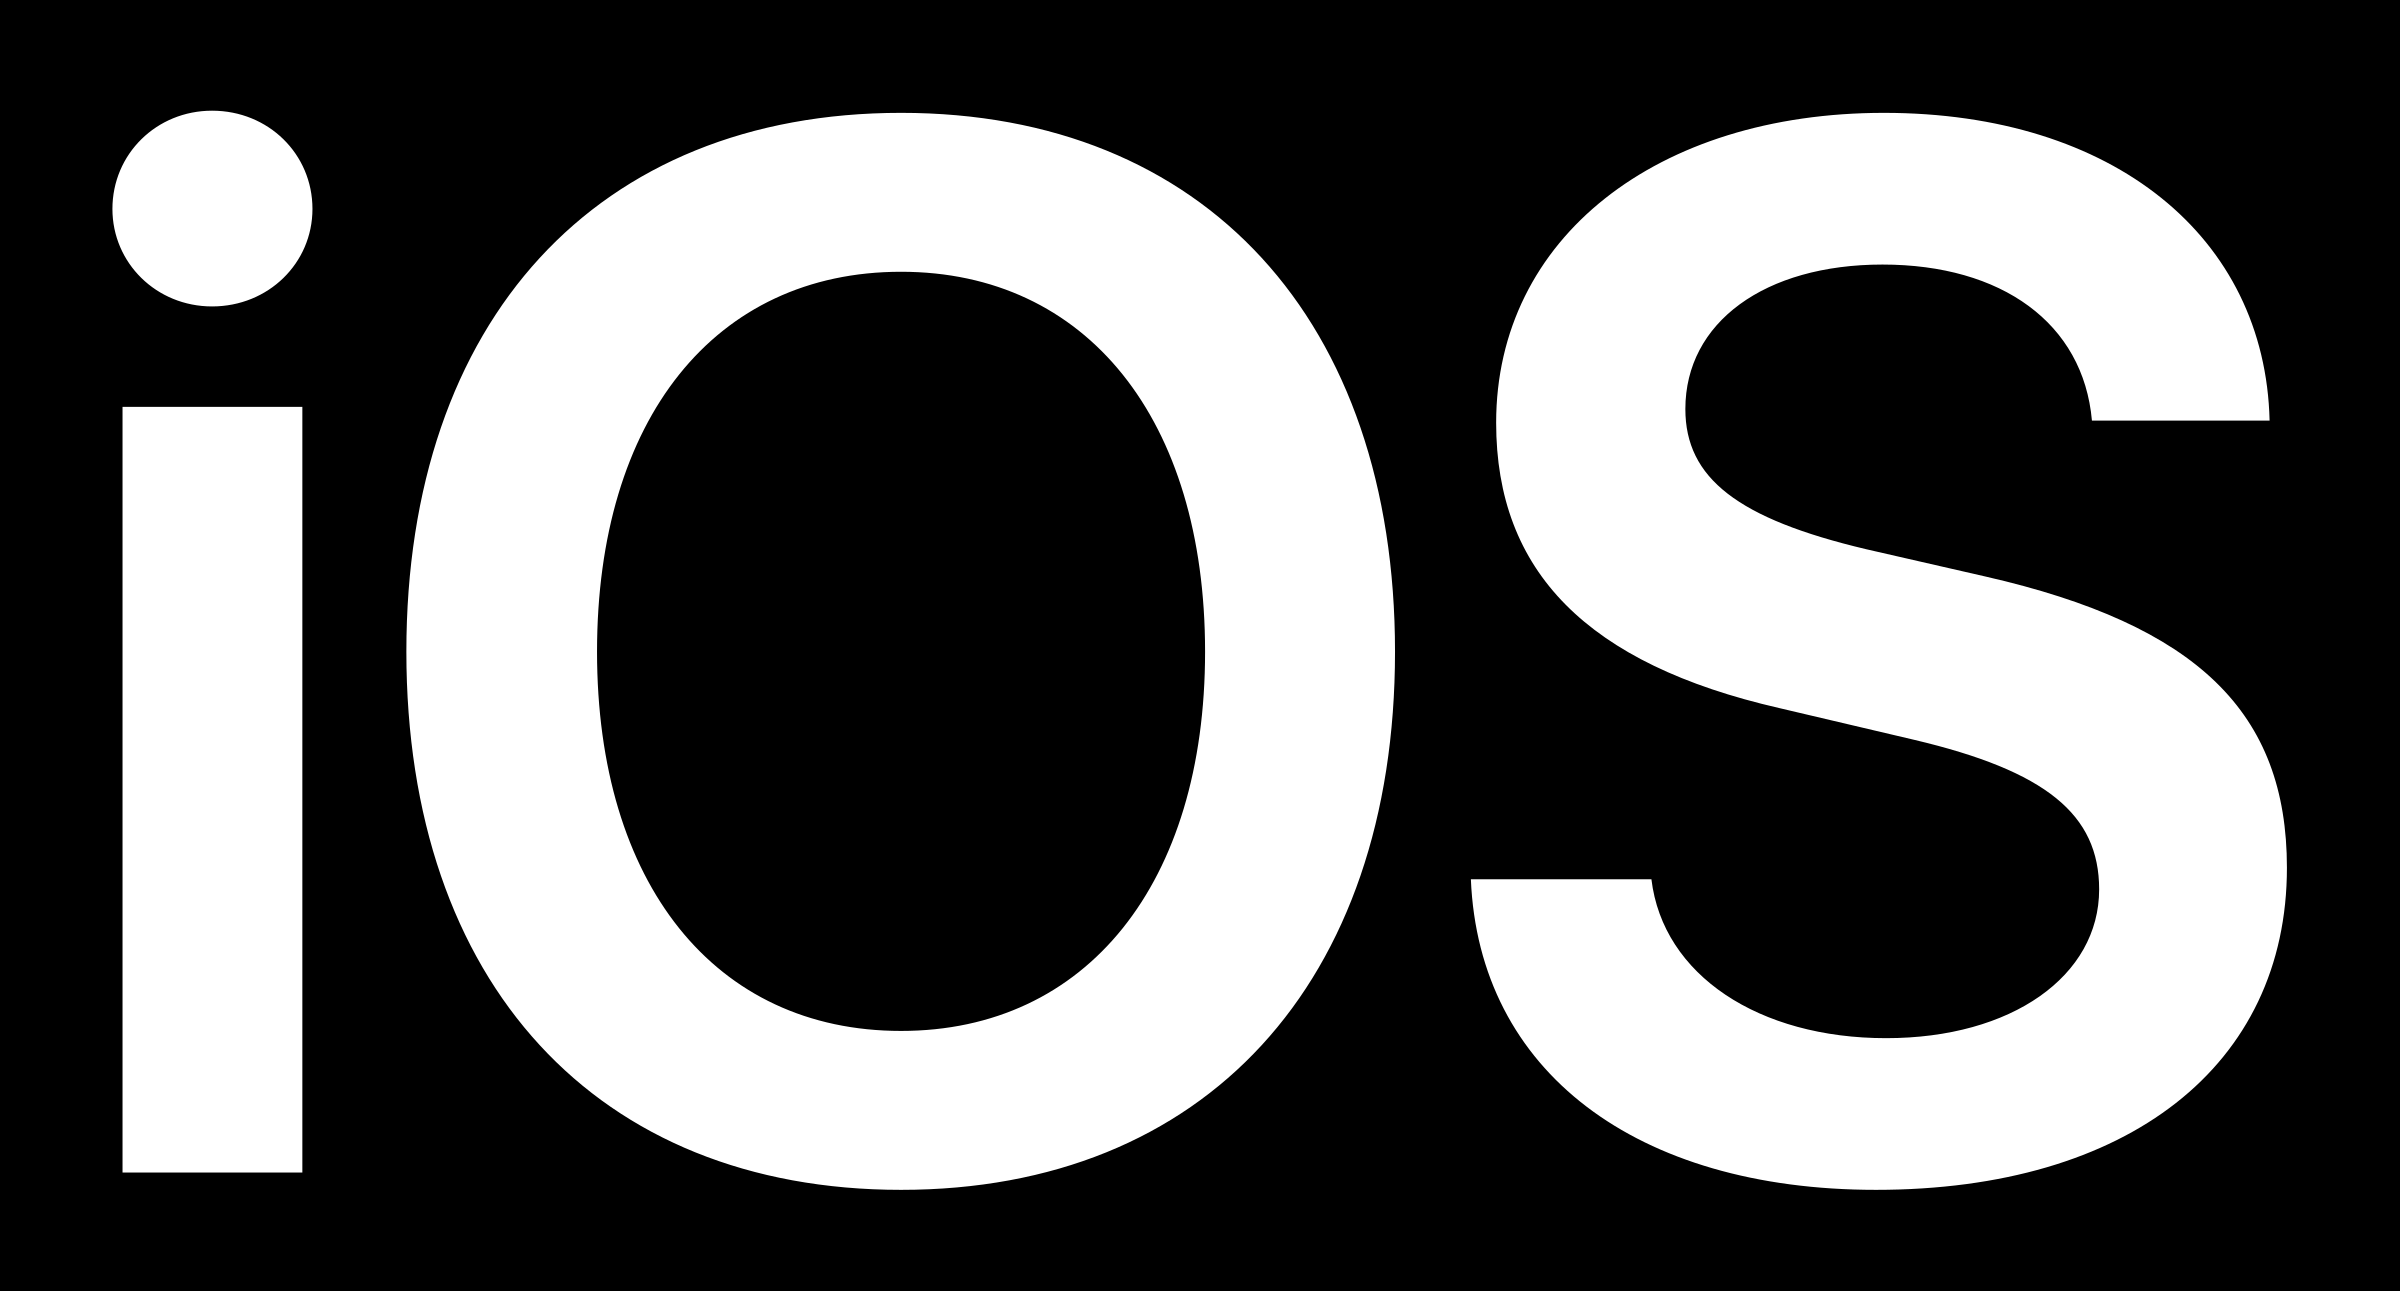 Black and White iOS Logo - iOS Logo PNG Transparent & SVG Vector - Freebie Supply